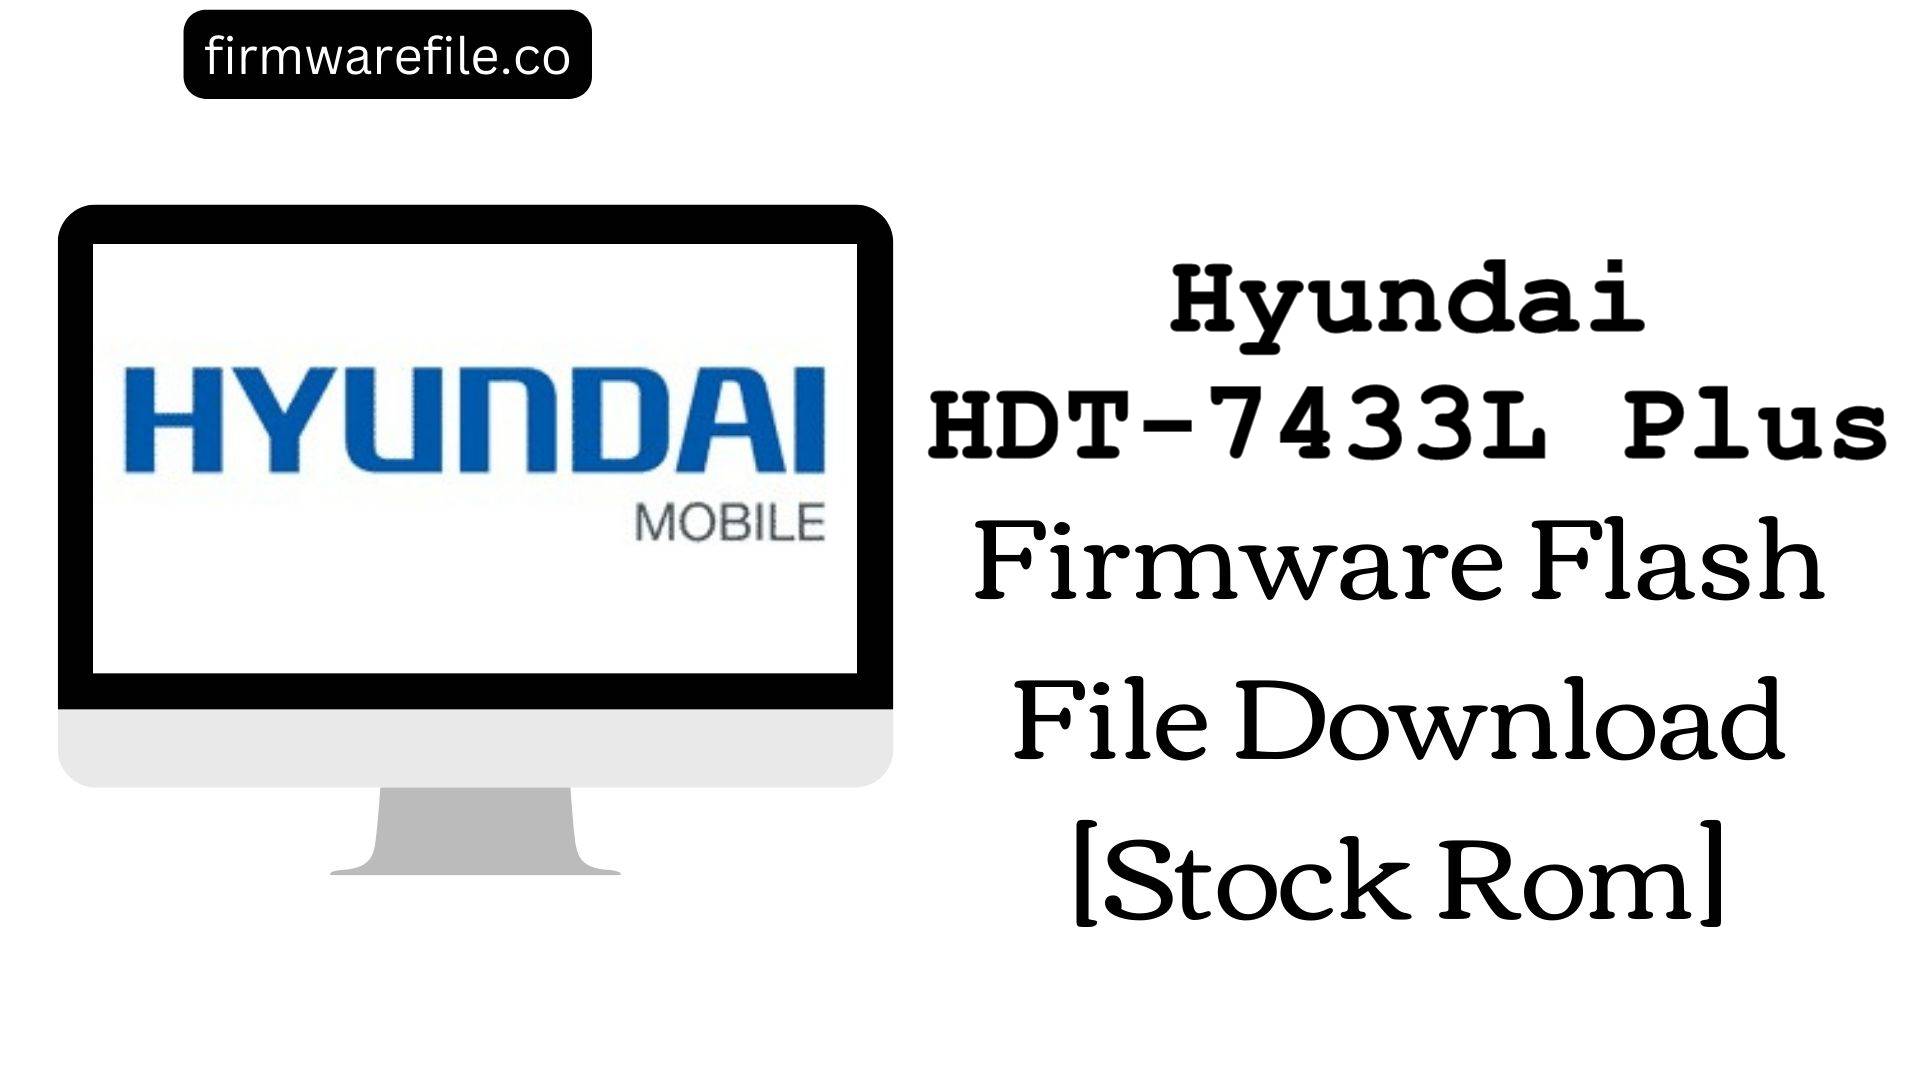 Hyundai HDT 7433L Plus